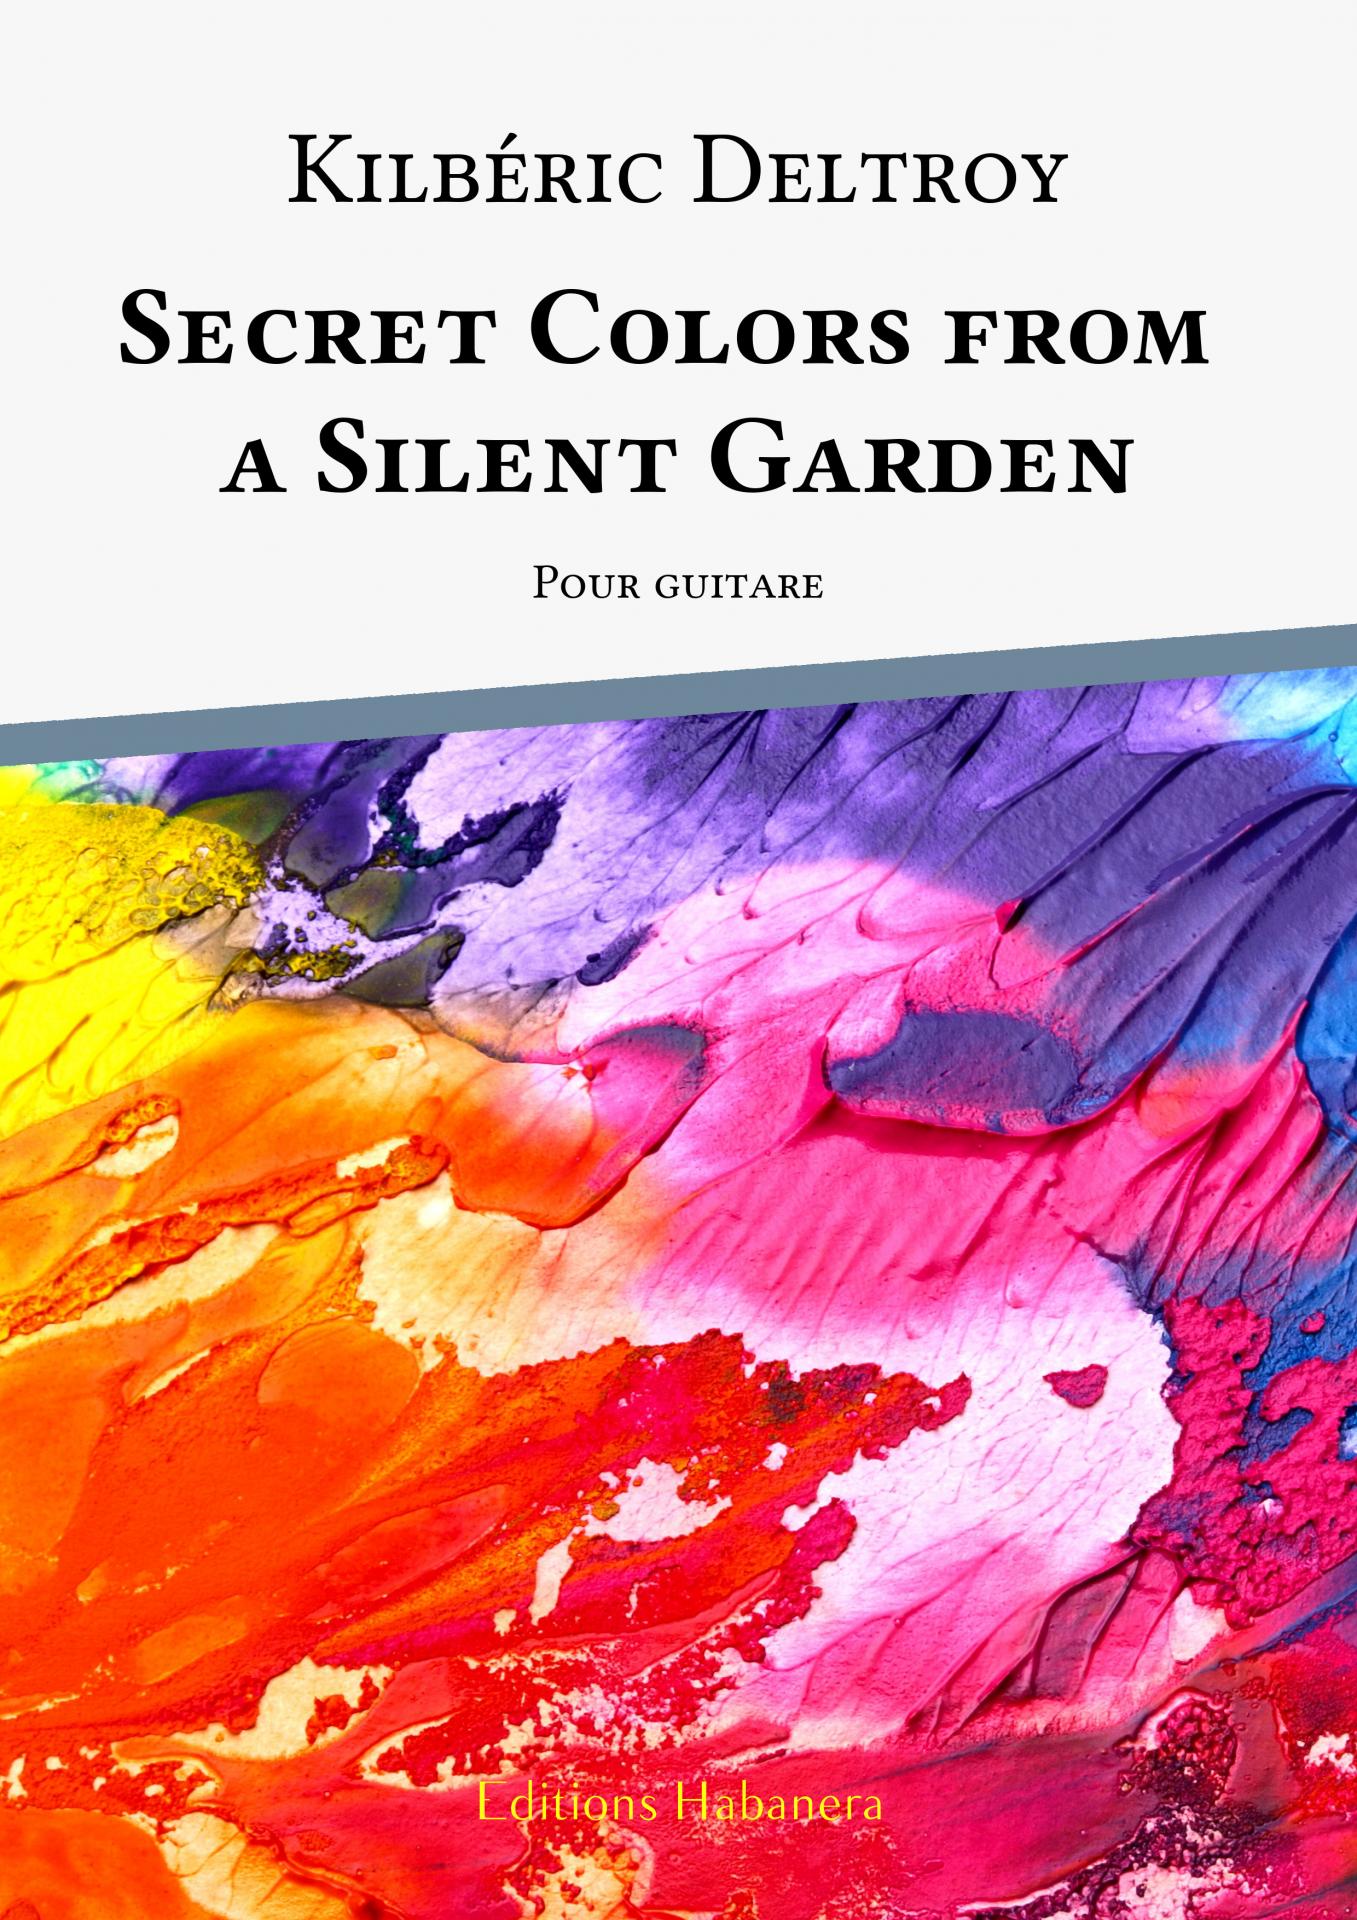 Eh 41 1 kd secret colors from a silent garden kilberic deltroy couverture